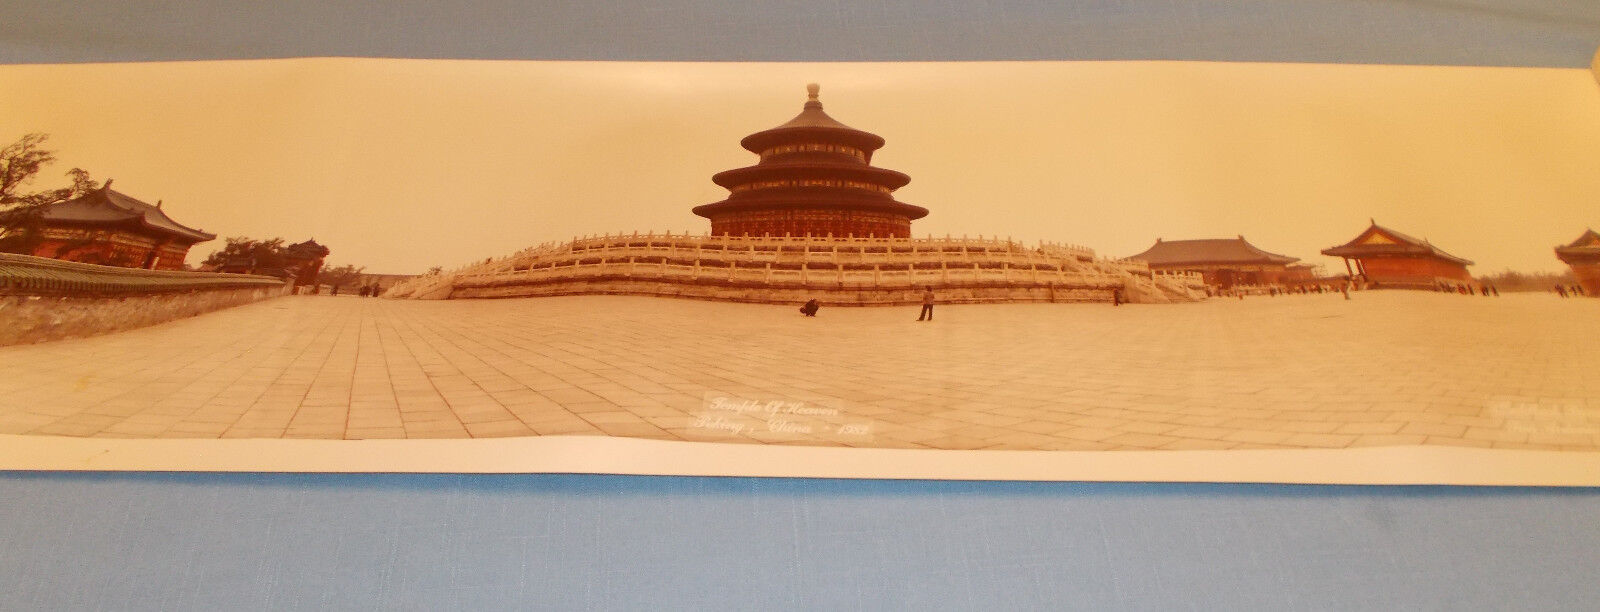 E.O. GOLDBECK PHOTO. TEMPLE OF HEAVEN – CHINA – PANORAMIC PICTURE 1982 